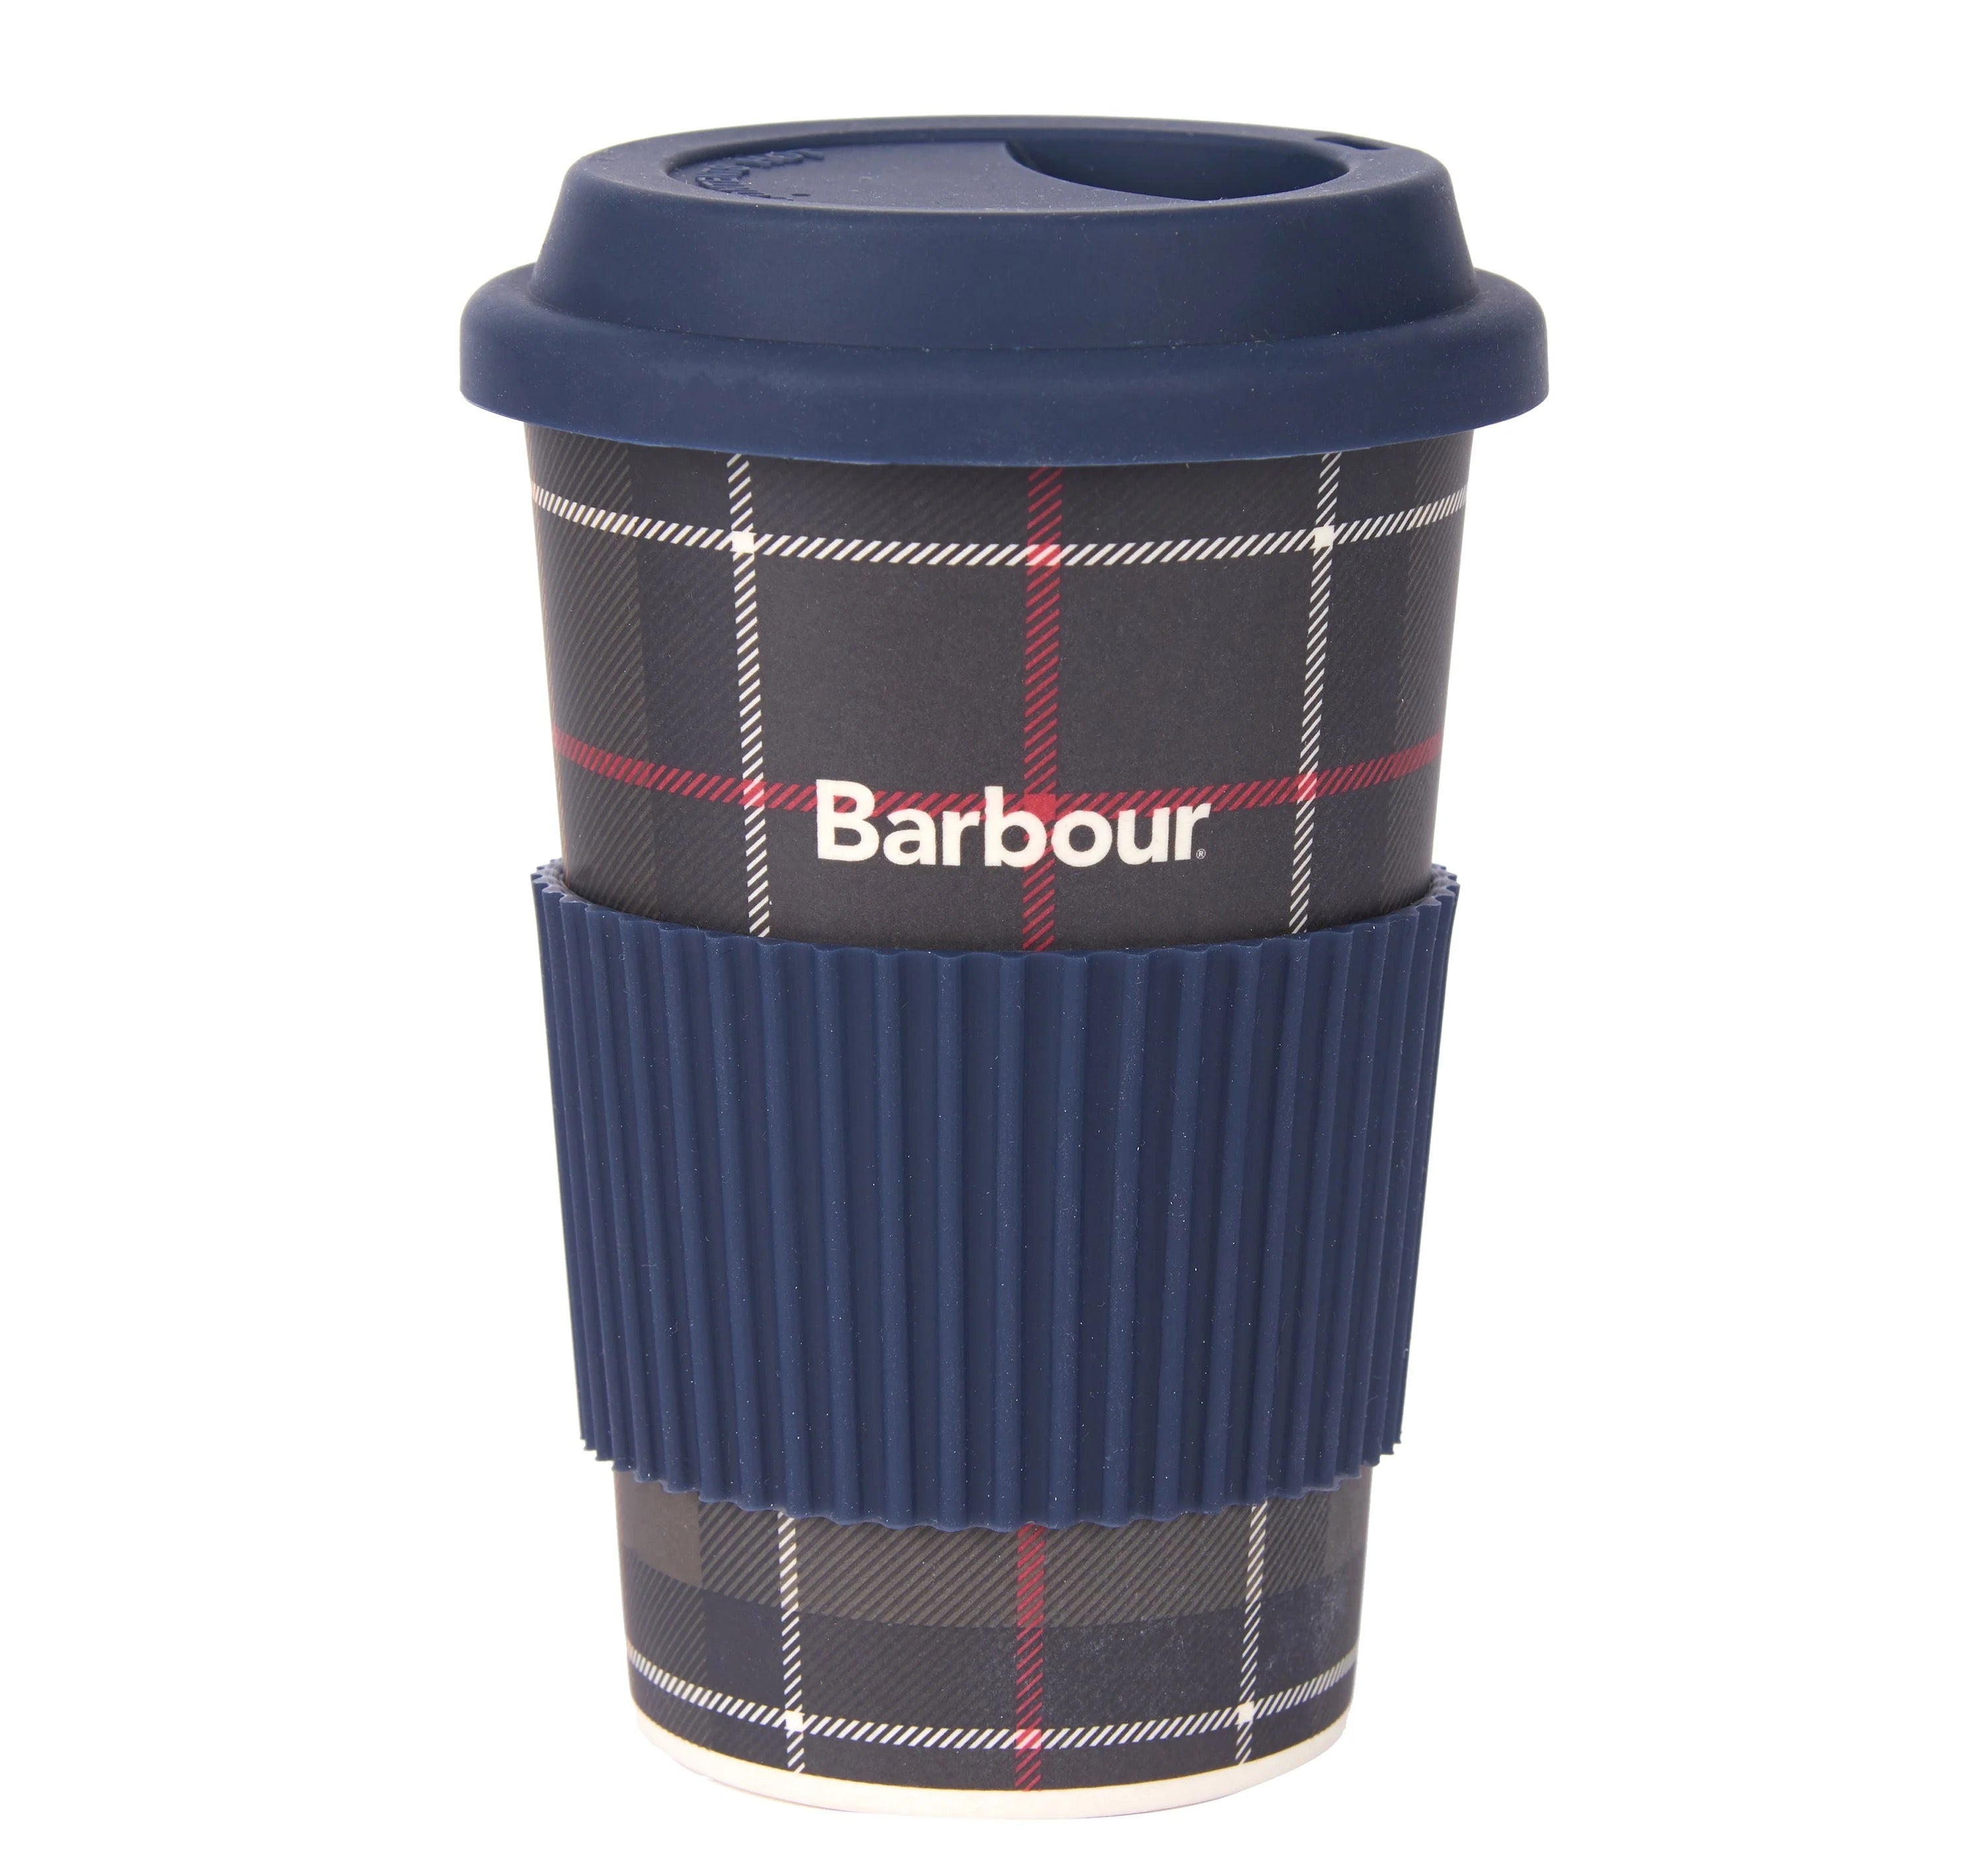 Barbour Tartan Travel Mug & Ear muff Set